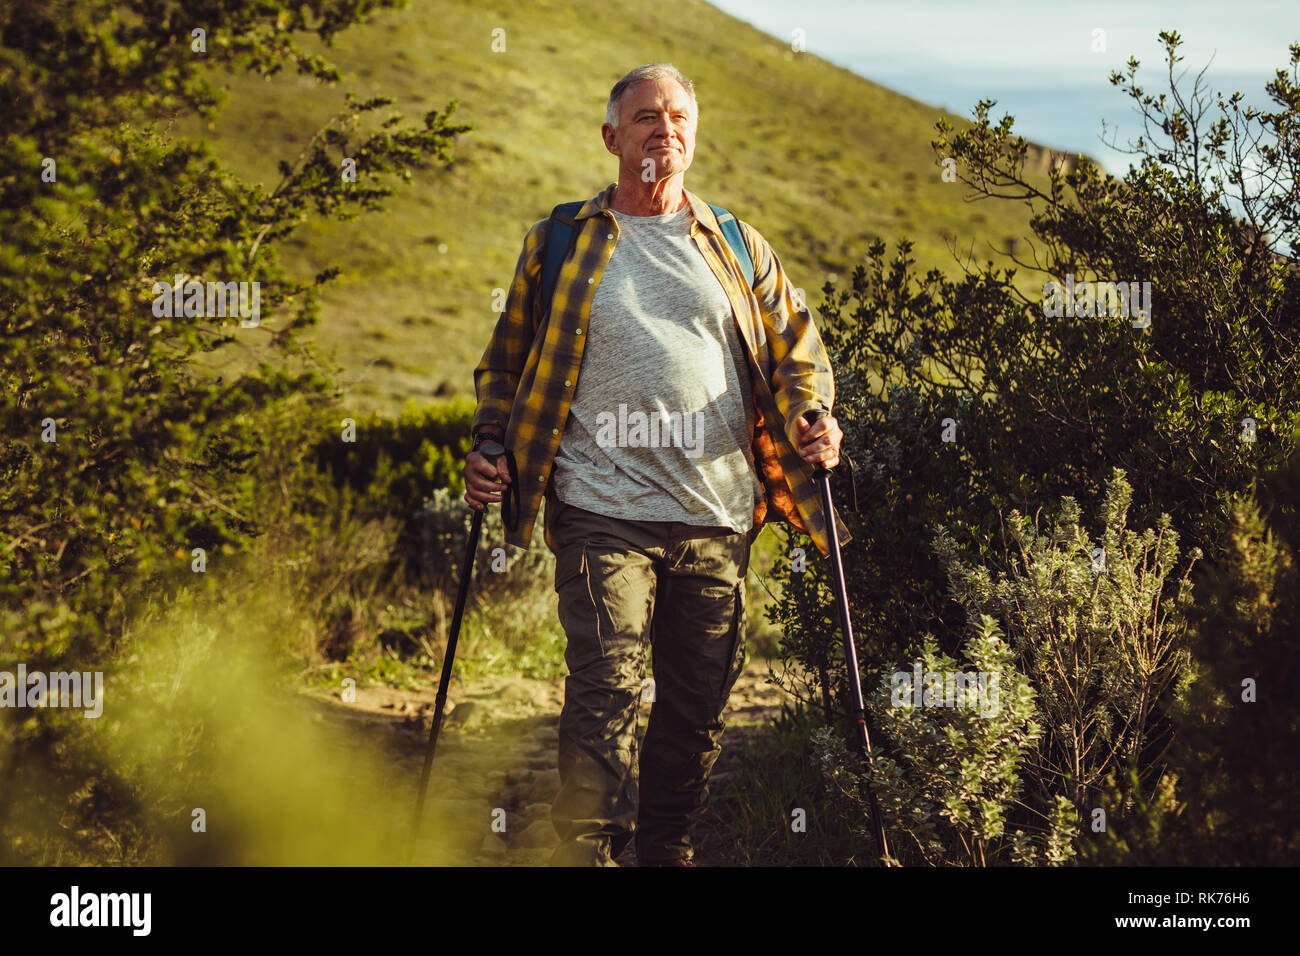 Adventurous man on a trekking trip on a hilly terrain. Senior man walking on a hilly trail path holding trekking poles. Stock Photo